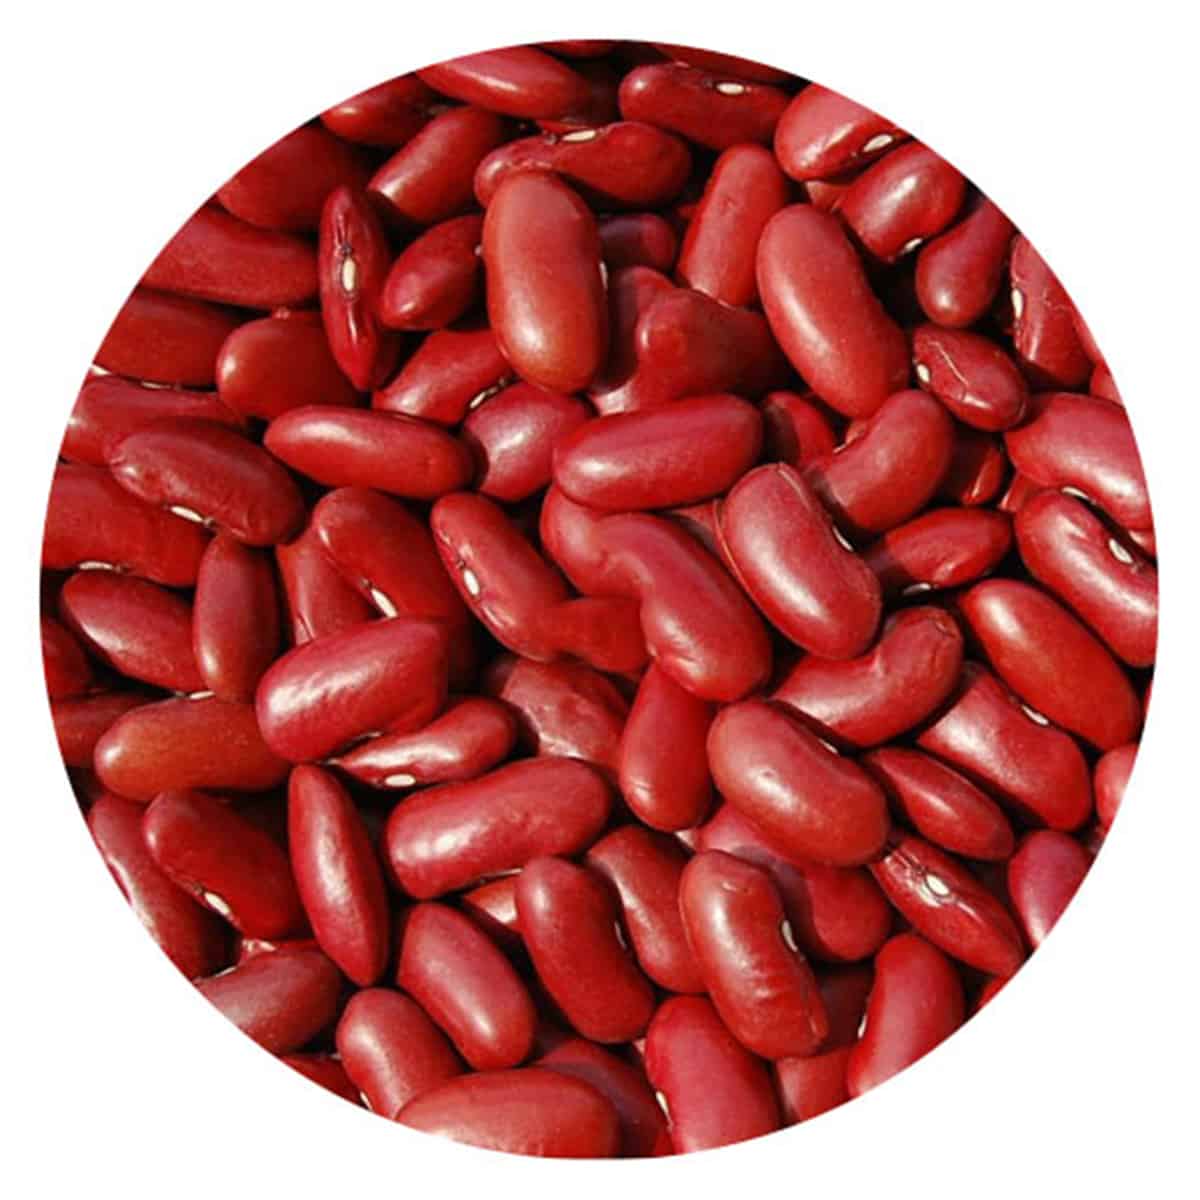 Buy IAG Foods Red Kidney Beans (Rajma) - 1 kg